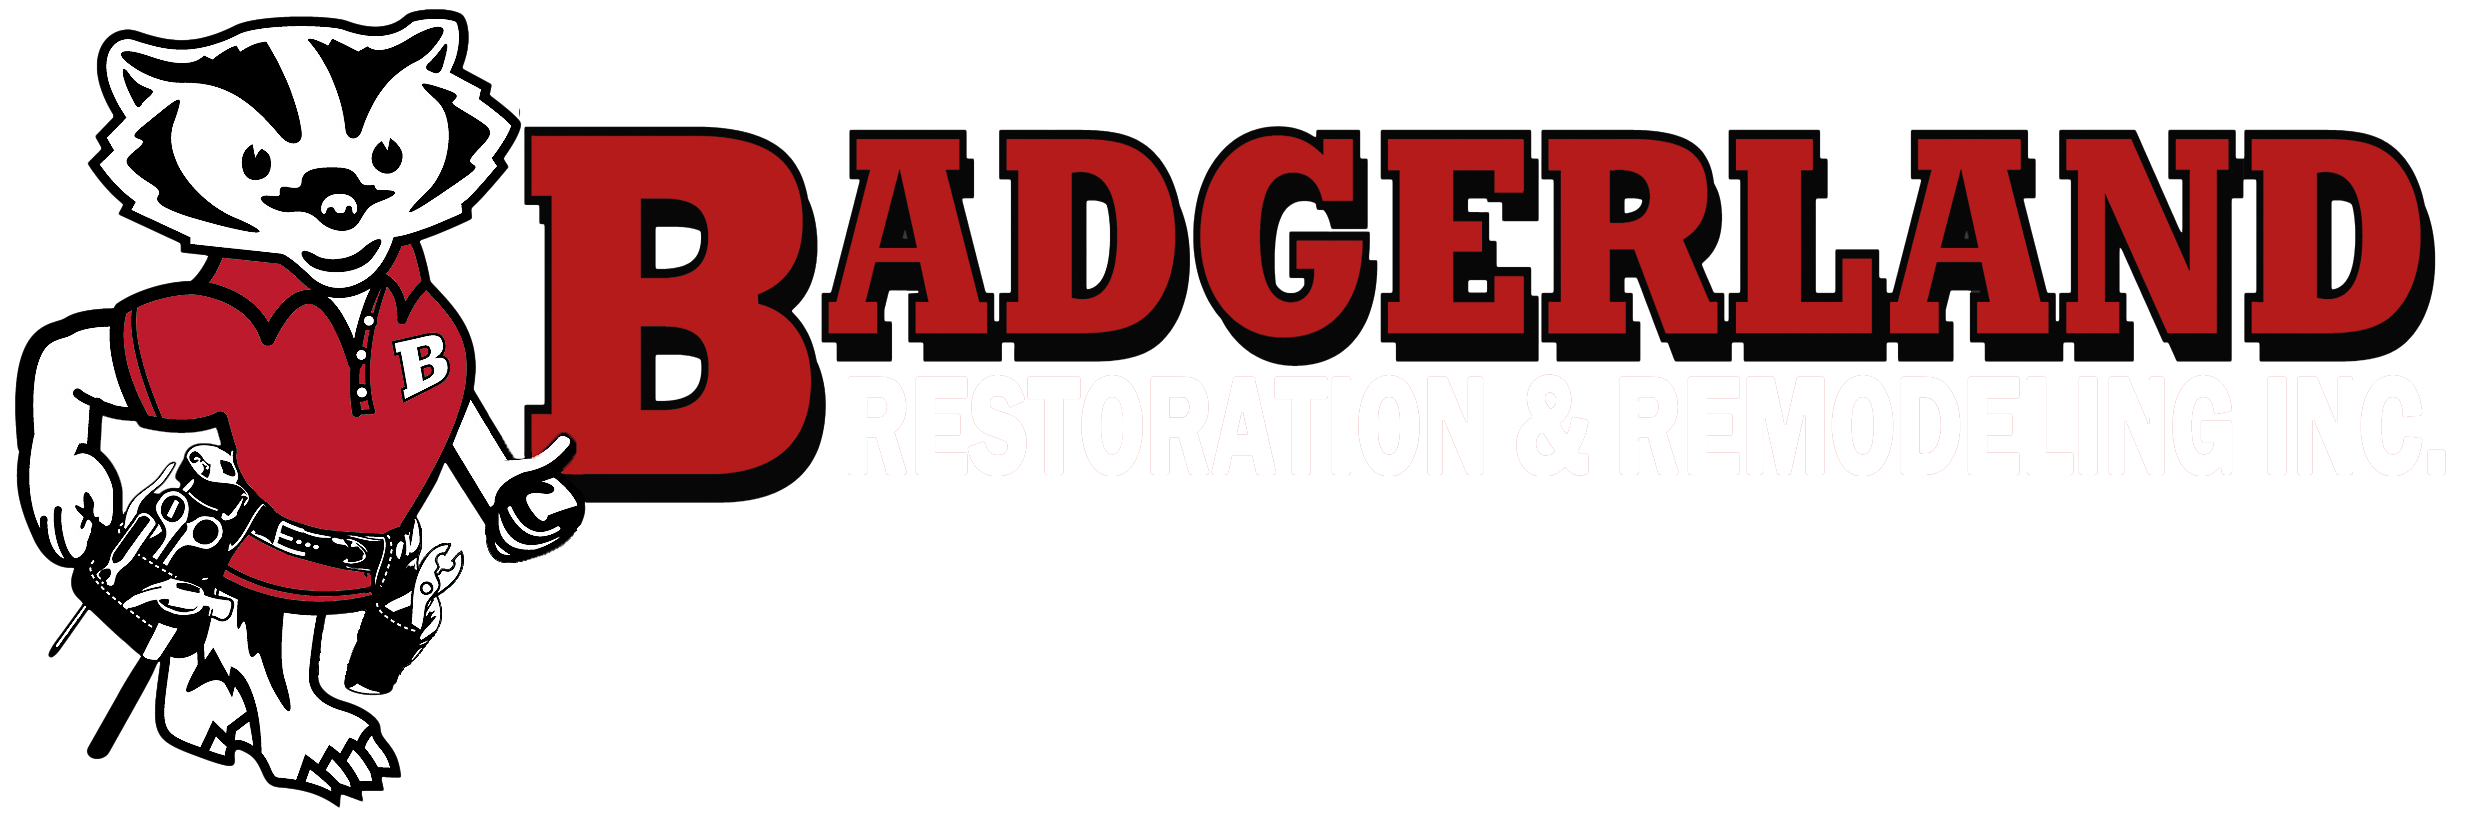 Company Logo For Badgerland Restoration and Remodeling'